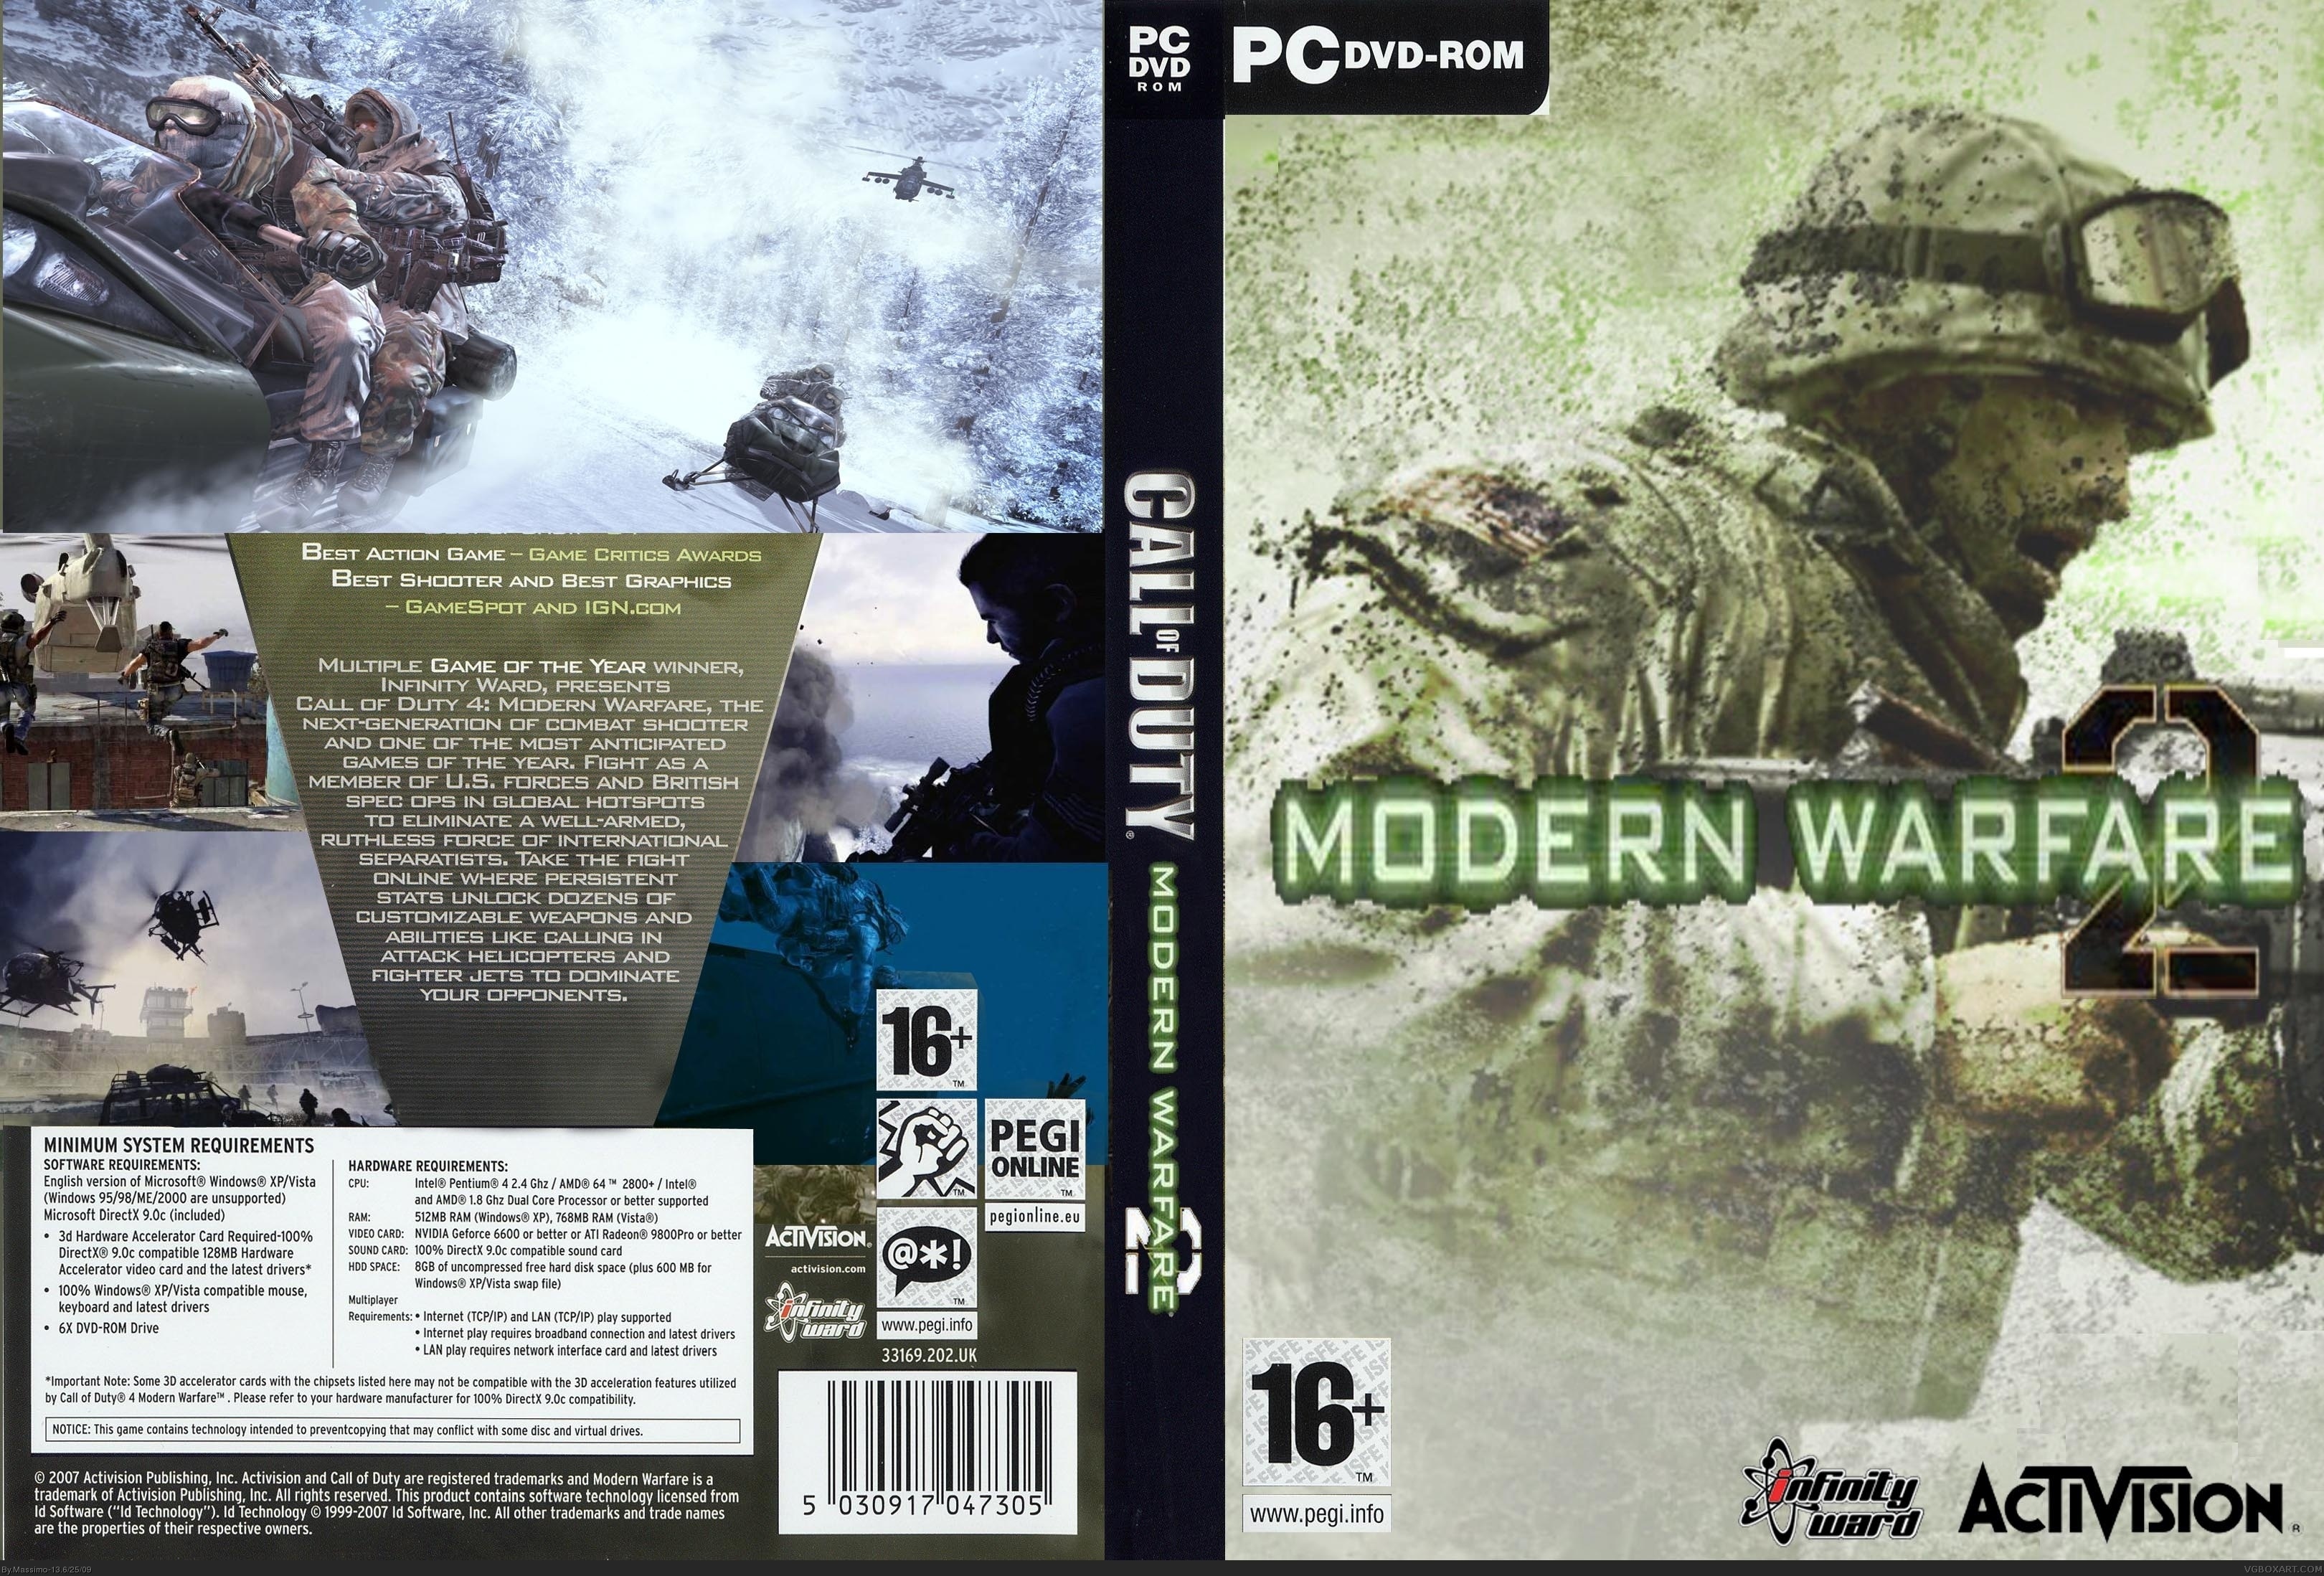 call of duty modern warfare 2 full game setup download